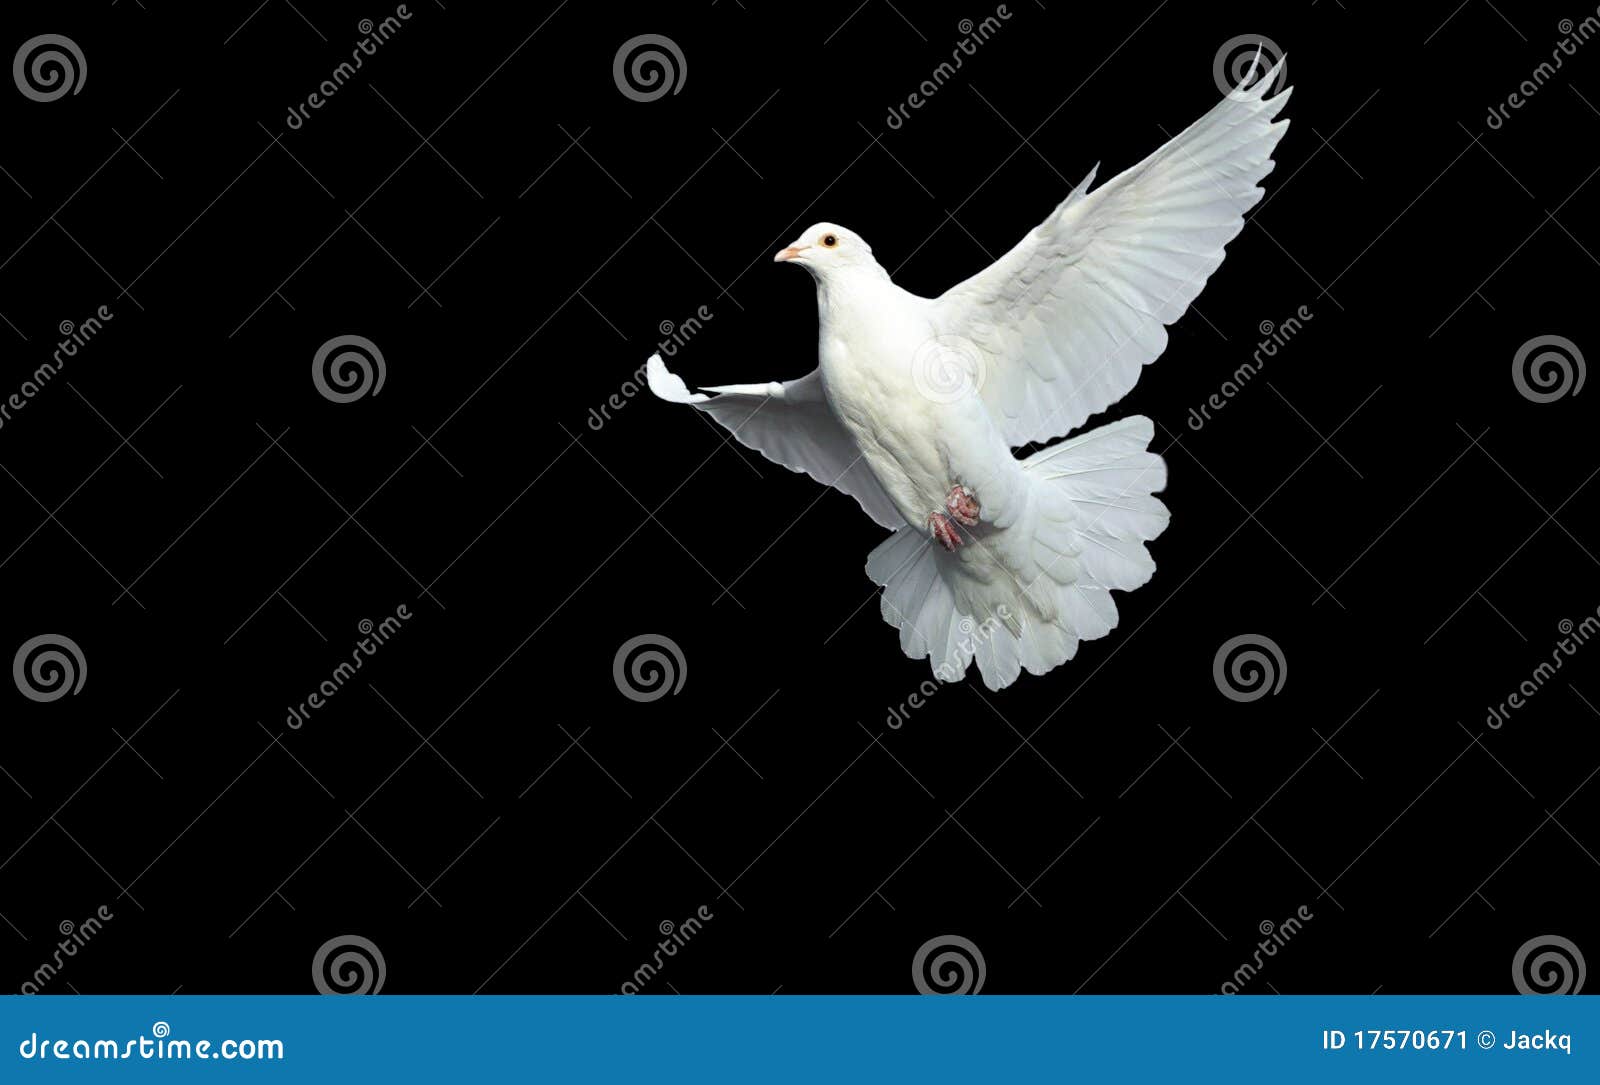 white dove in free flight